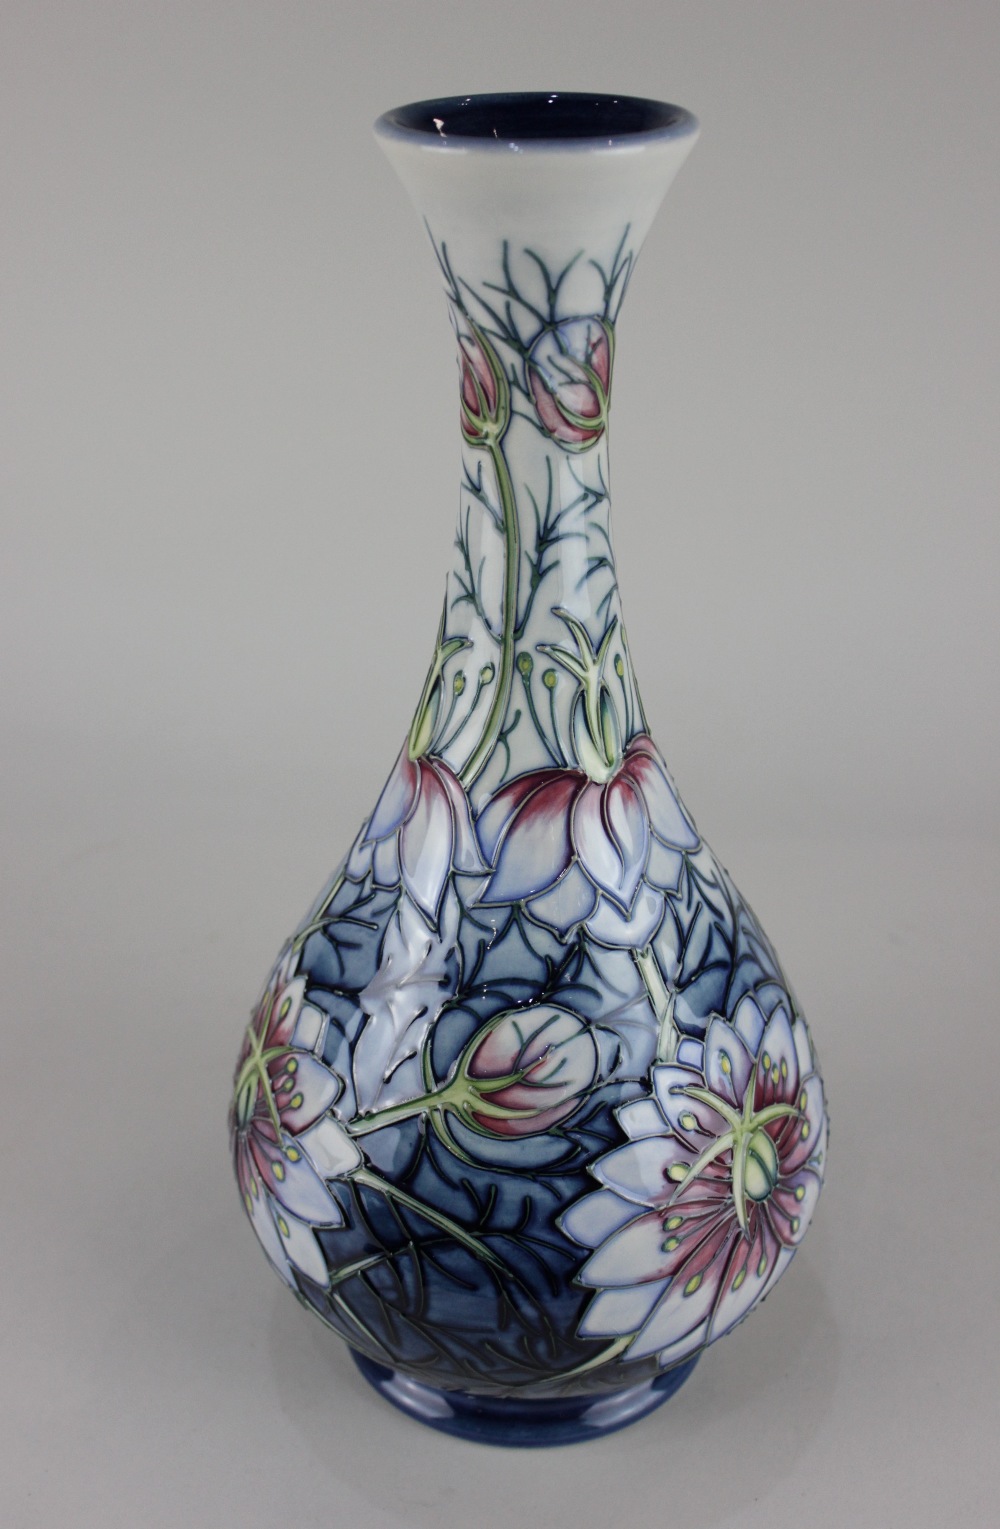 A Moorcroft pottery 'Love In The Mist' pattern bottle vase, 31.5cm high